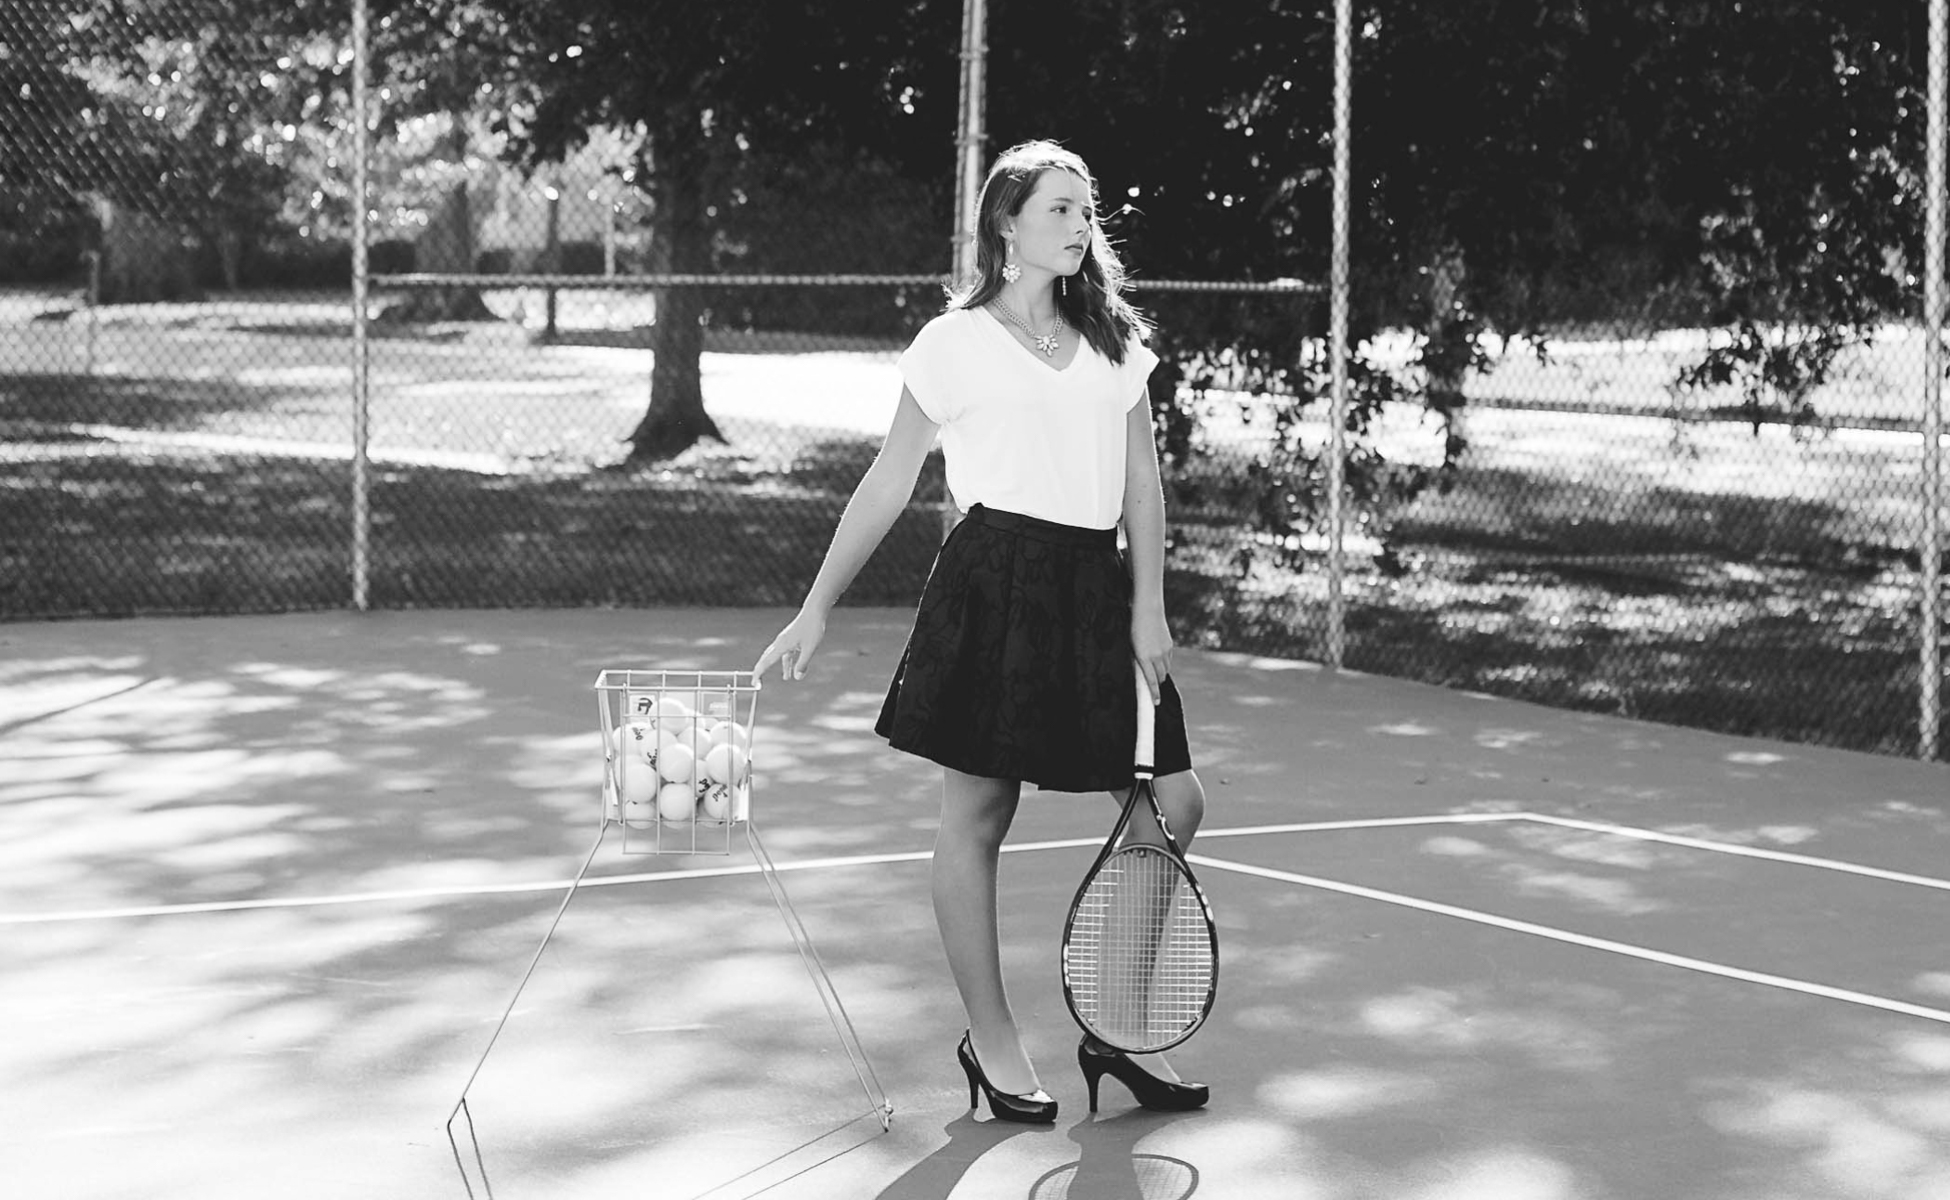 Kate Spade Inspired Editorial Tennis Senior Portrait Session Edenton NC Sarah Hilts Photography 